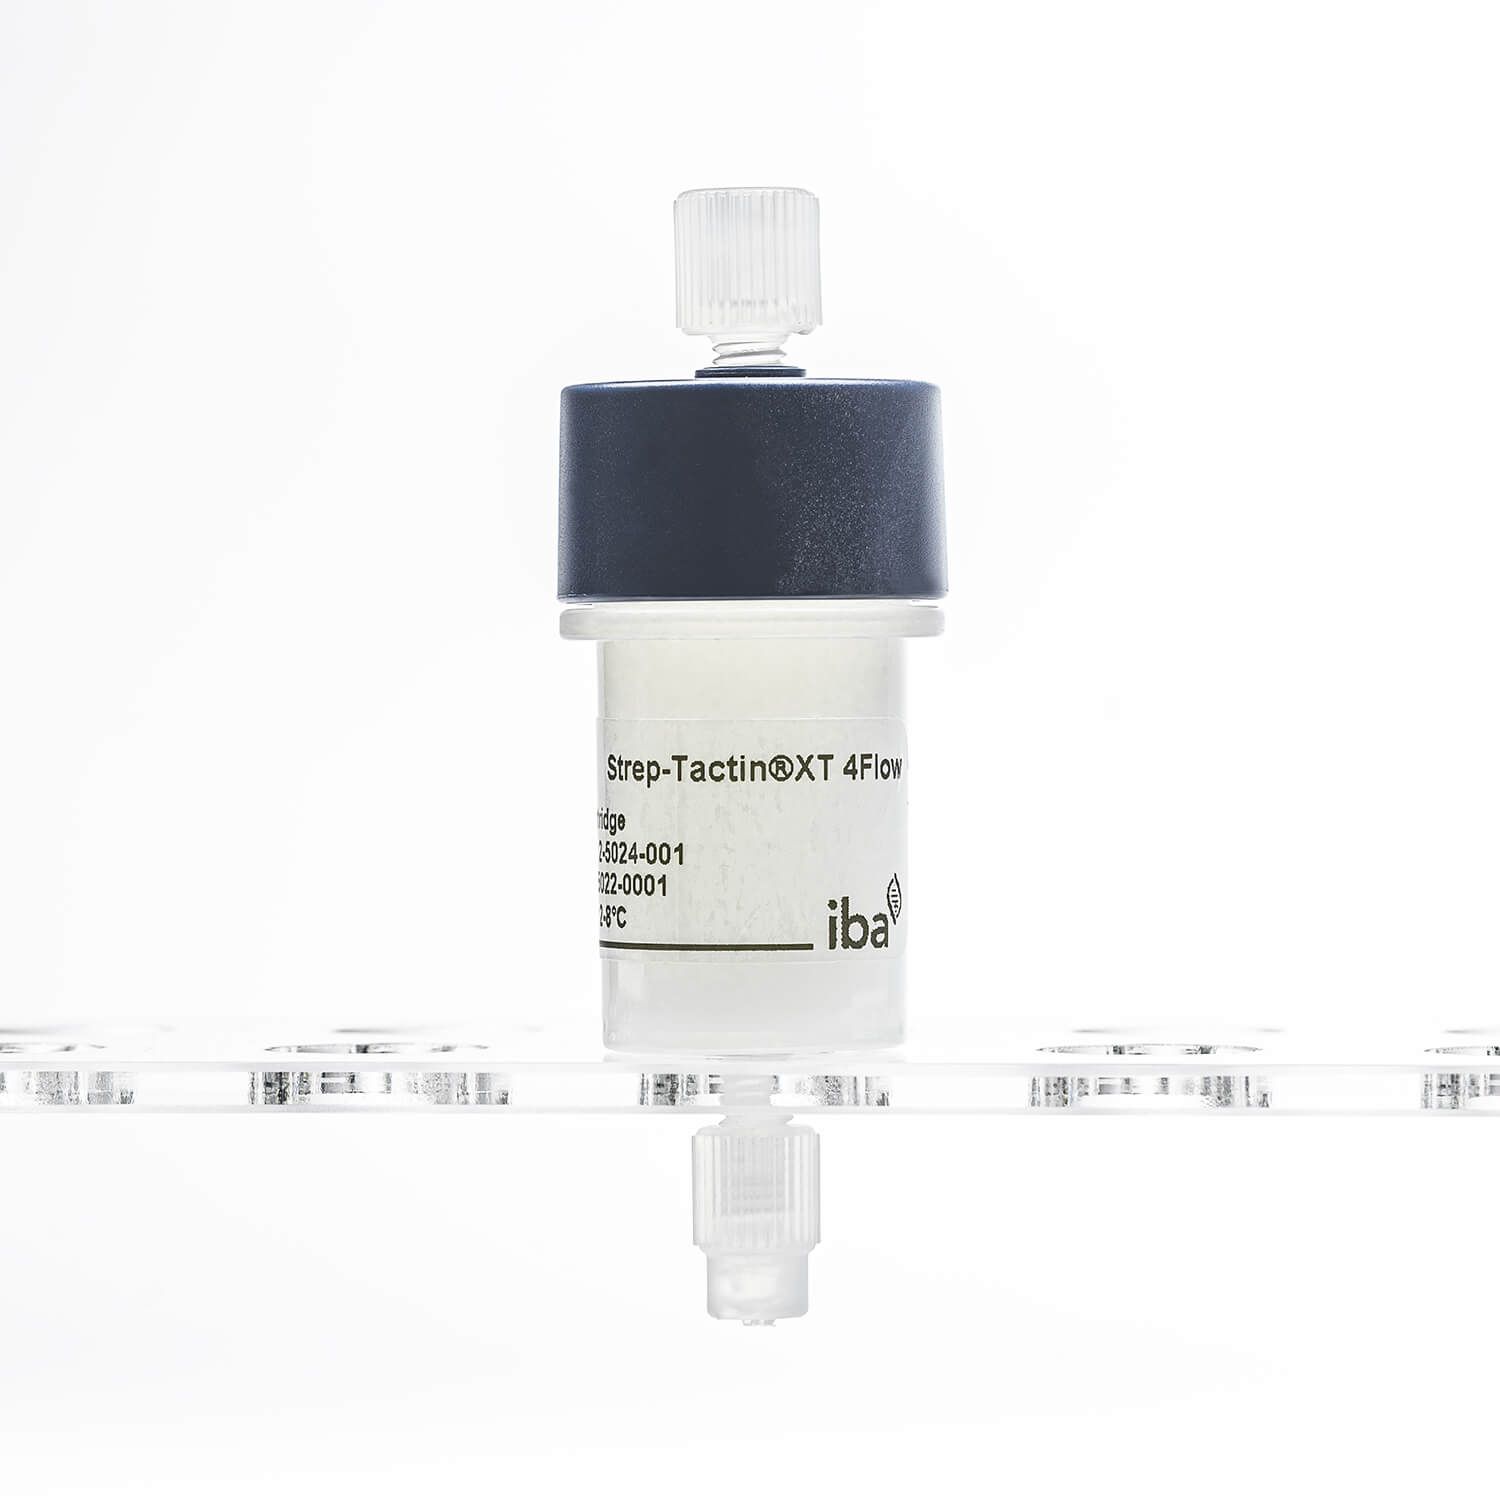 Strep-Tactin®XT 4Flow® cartridge (with 10-32 connection for HPLC and Äkta)